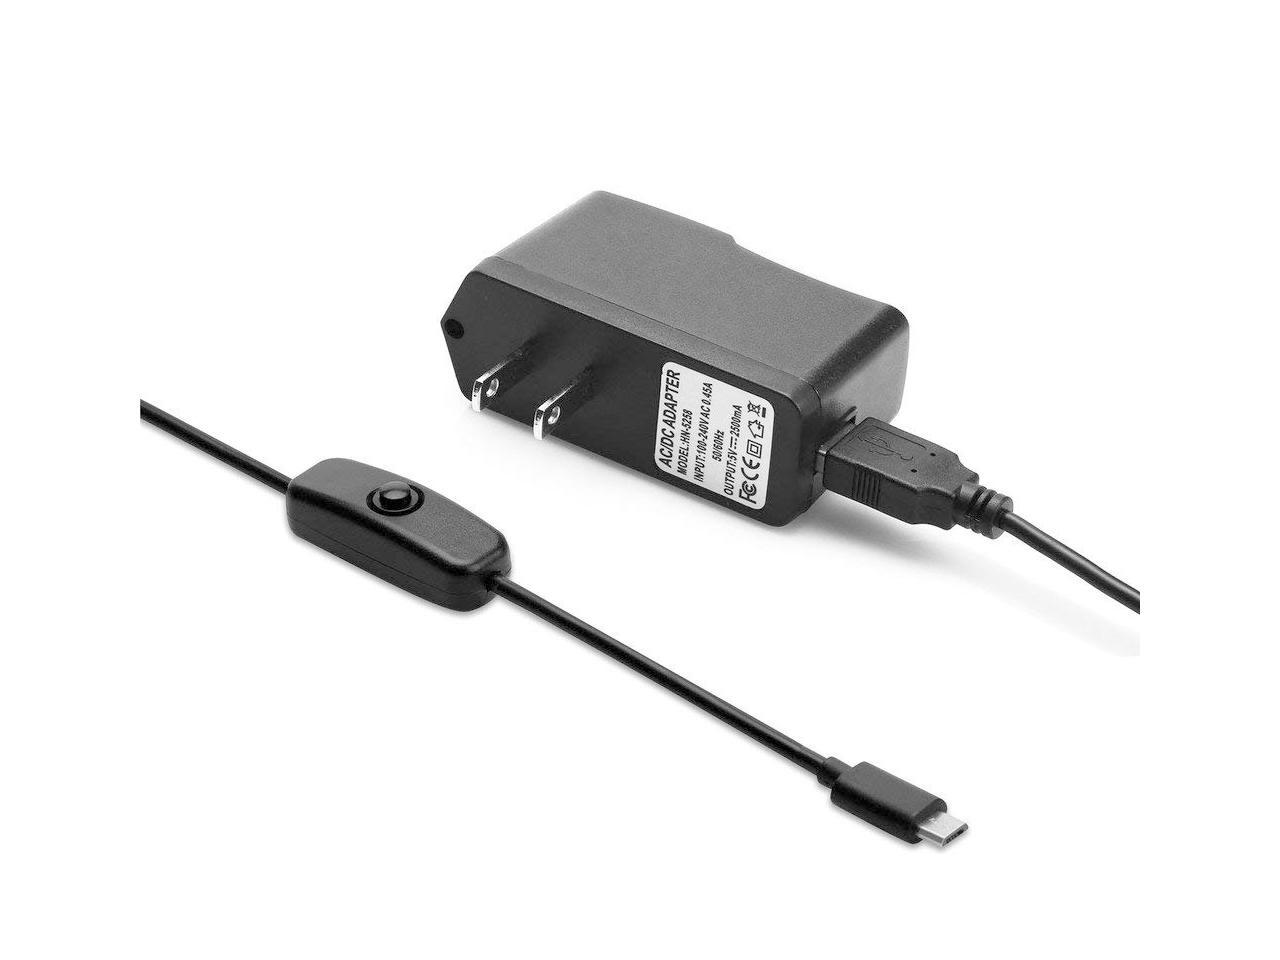 yan AC DC Adapter Power Charger+USB Cord for/Bose SoundLink Color #415859 BT Speaker 